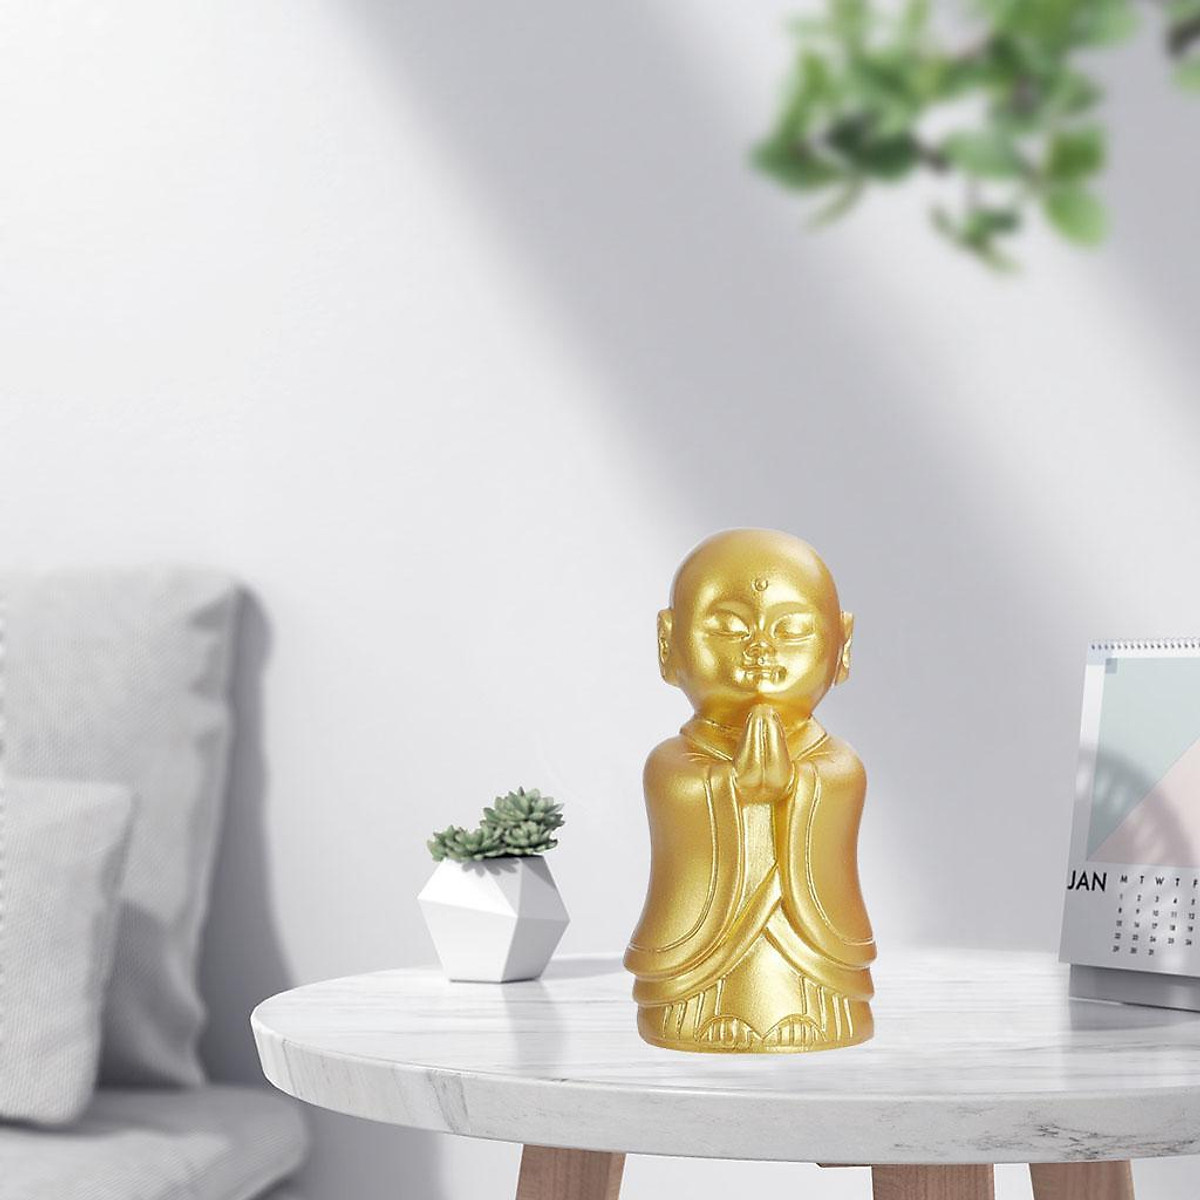 StatueStudio Resin Sitting Buddha Idols Large For Home Decor Office Gi